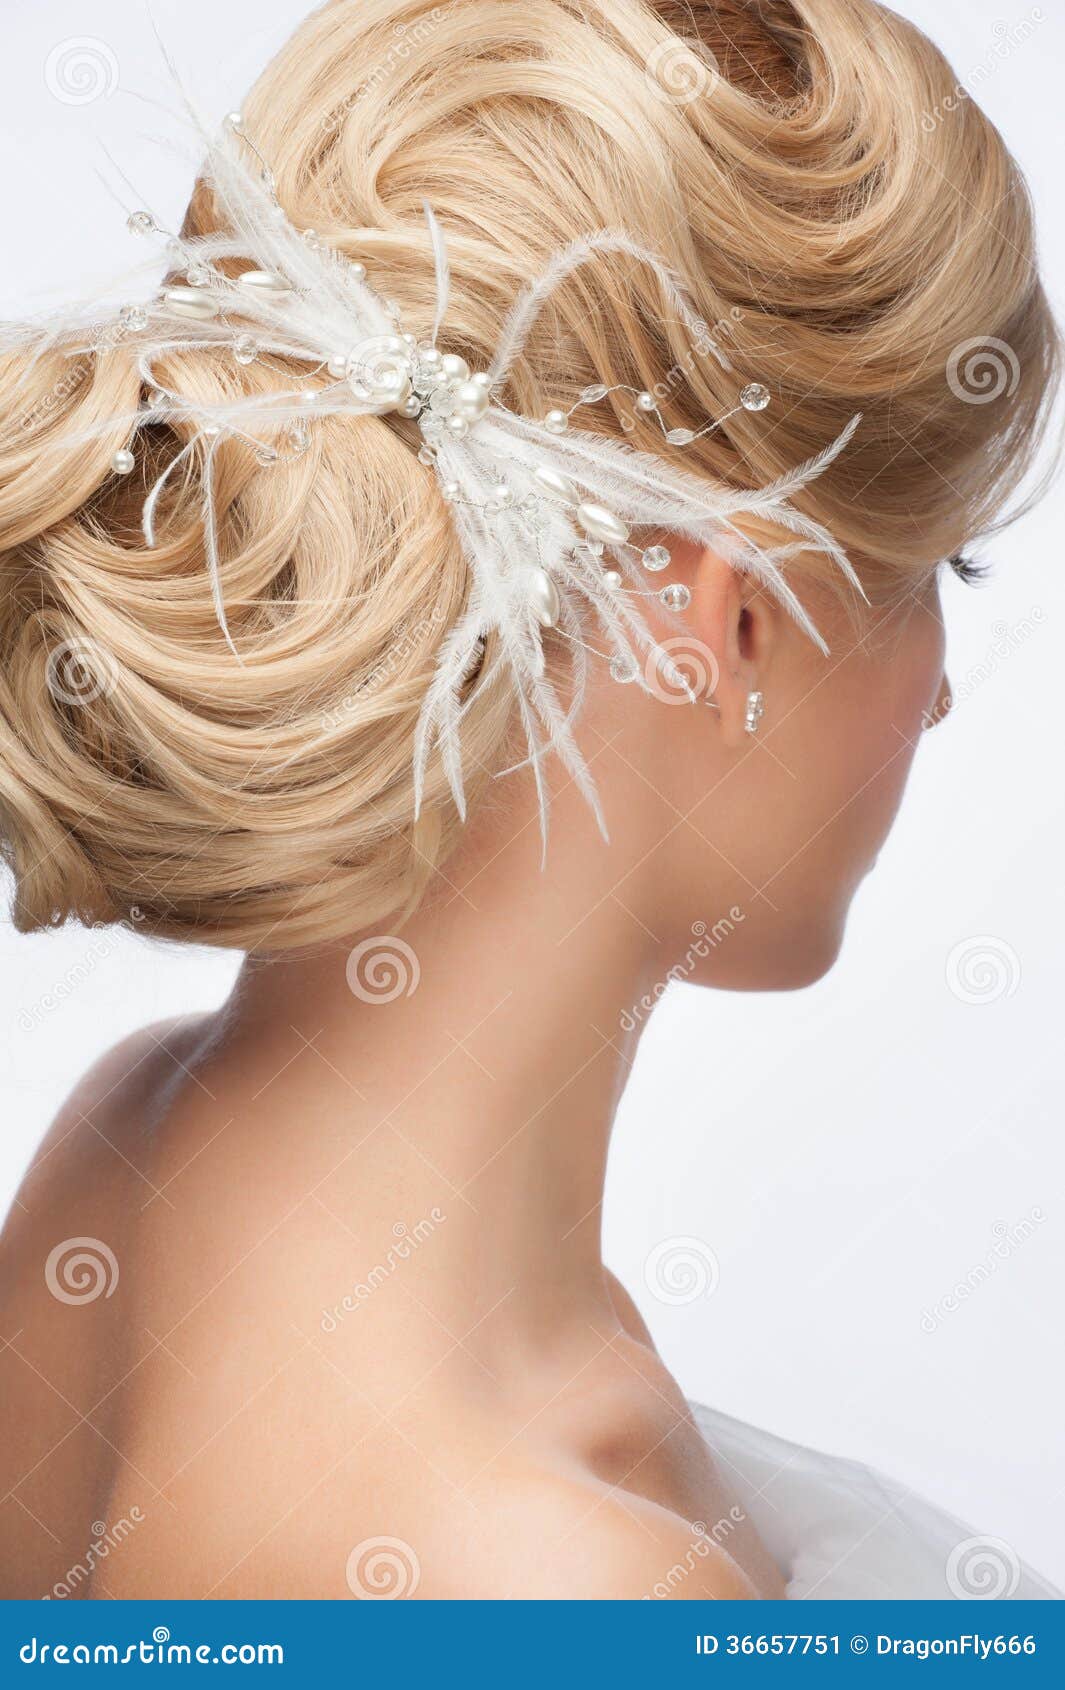 Bridal hairstyle stock photo. Image of bride, holiday - 13779192